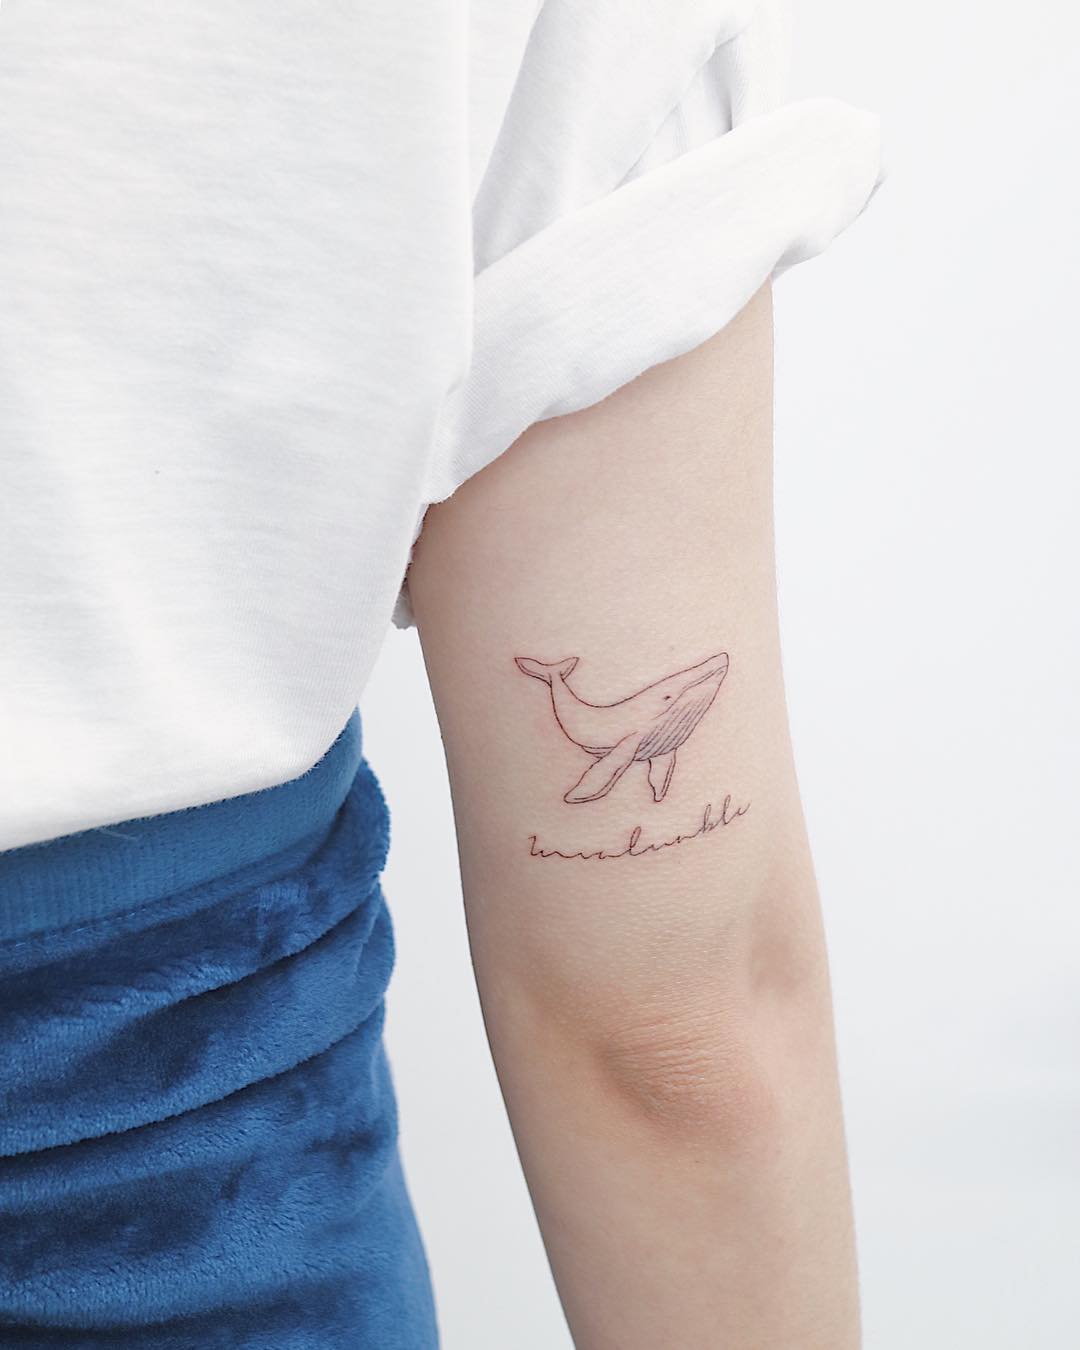 Small whale by tattooist Nemo